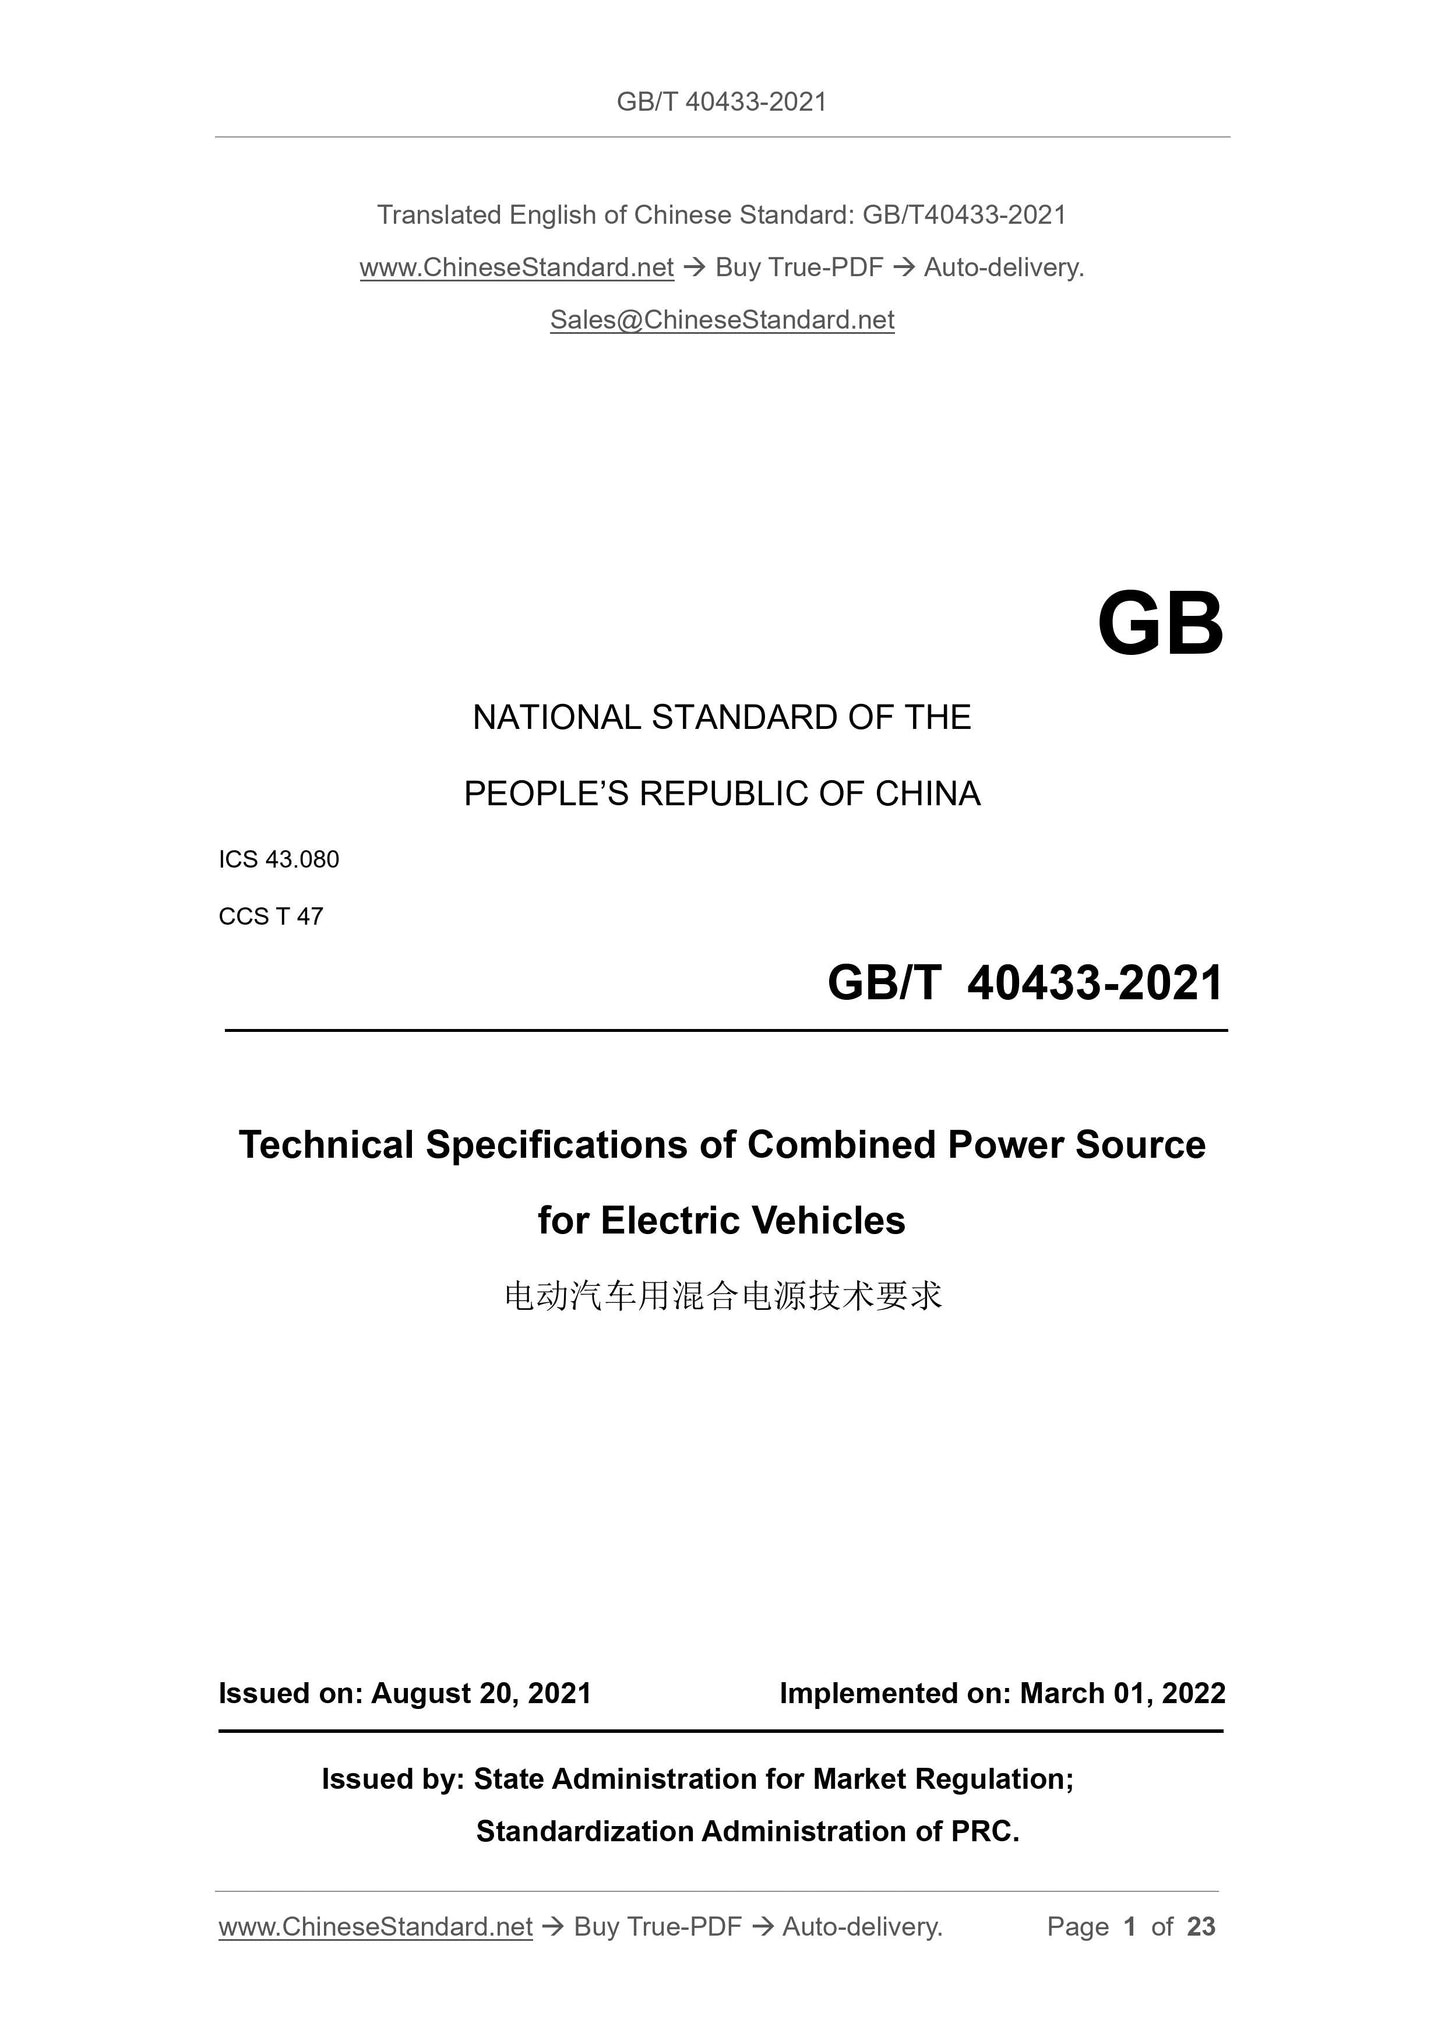 GBT40433-2021 Page 1